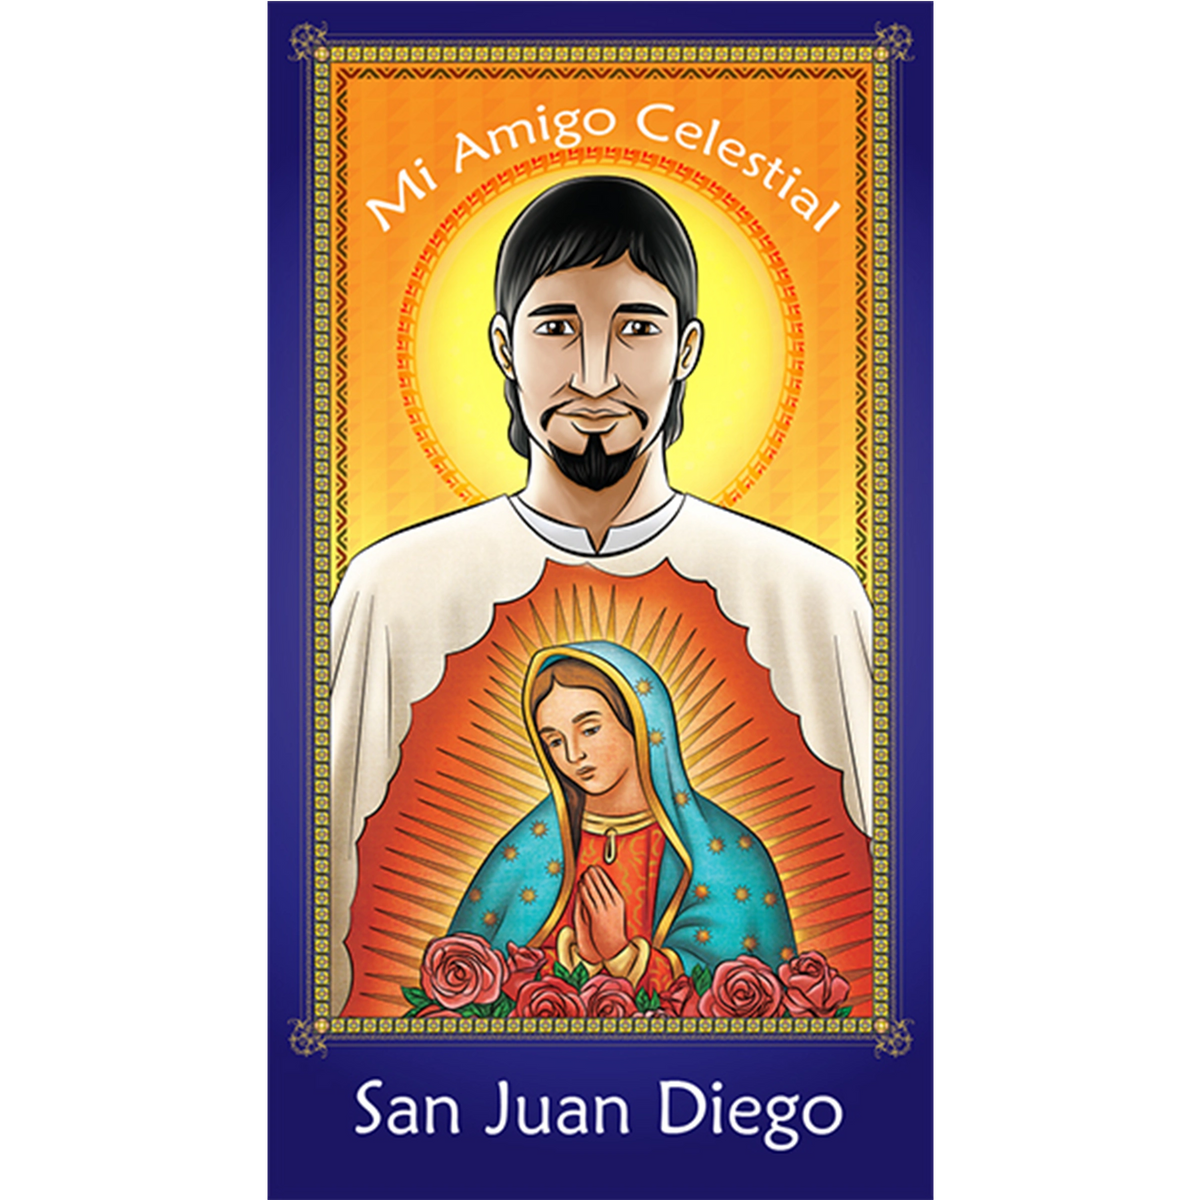 San Juan Diego Tarjeta de oración. Saint Juan Diego prayer card Spanish. 